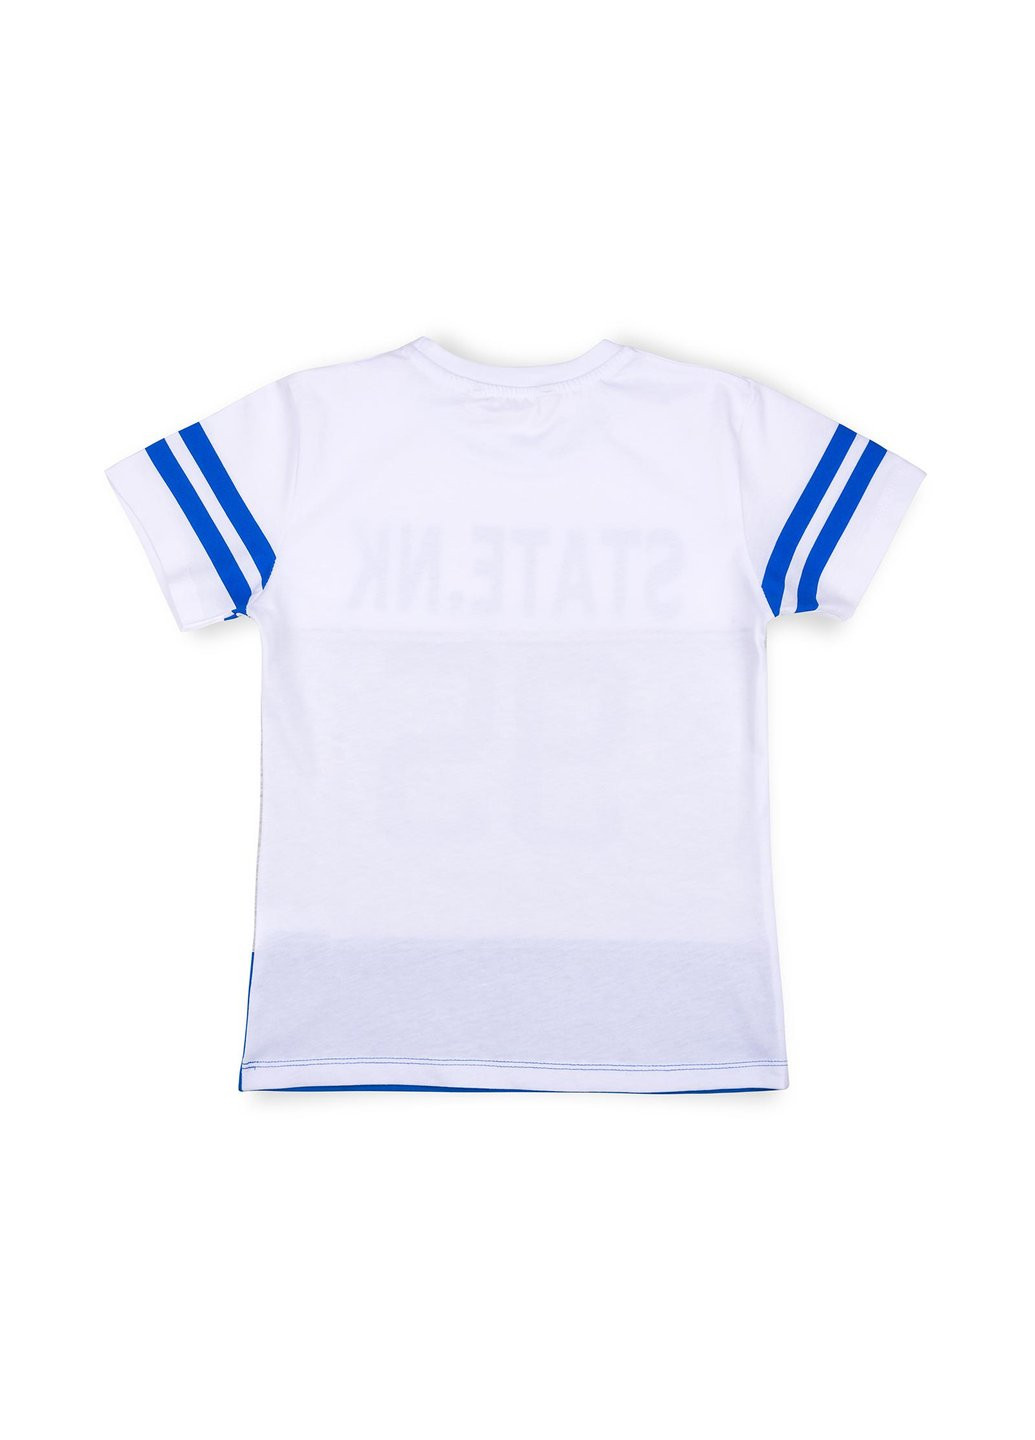 Белый летний набор детской одежды "state nk. 95" (11068-116b-white) Breeze